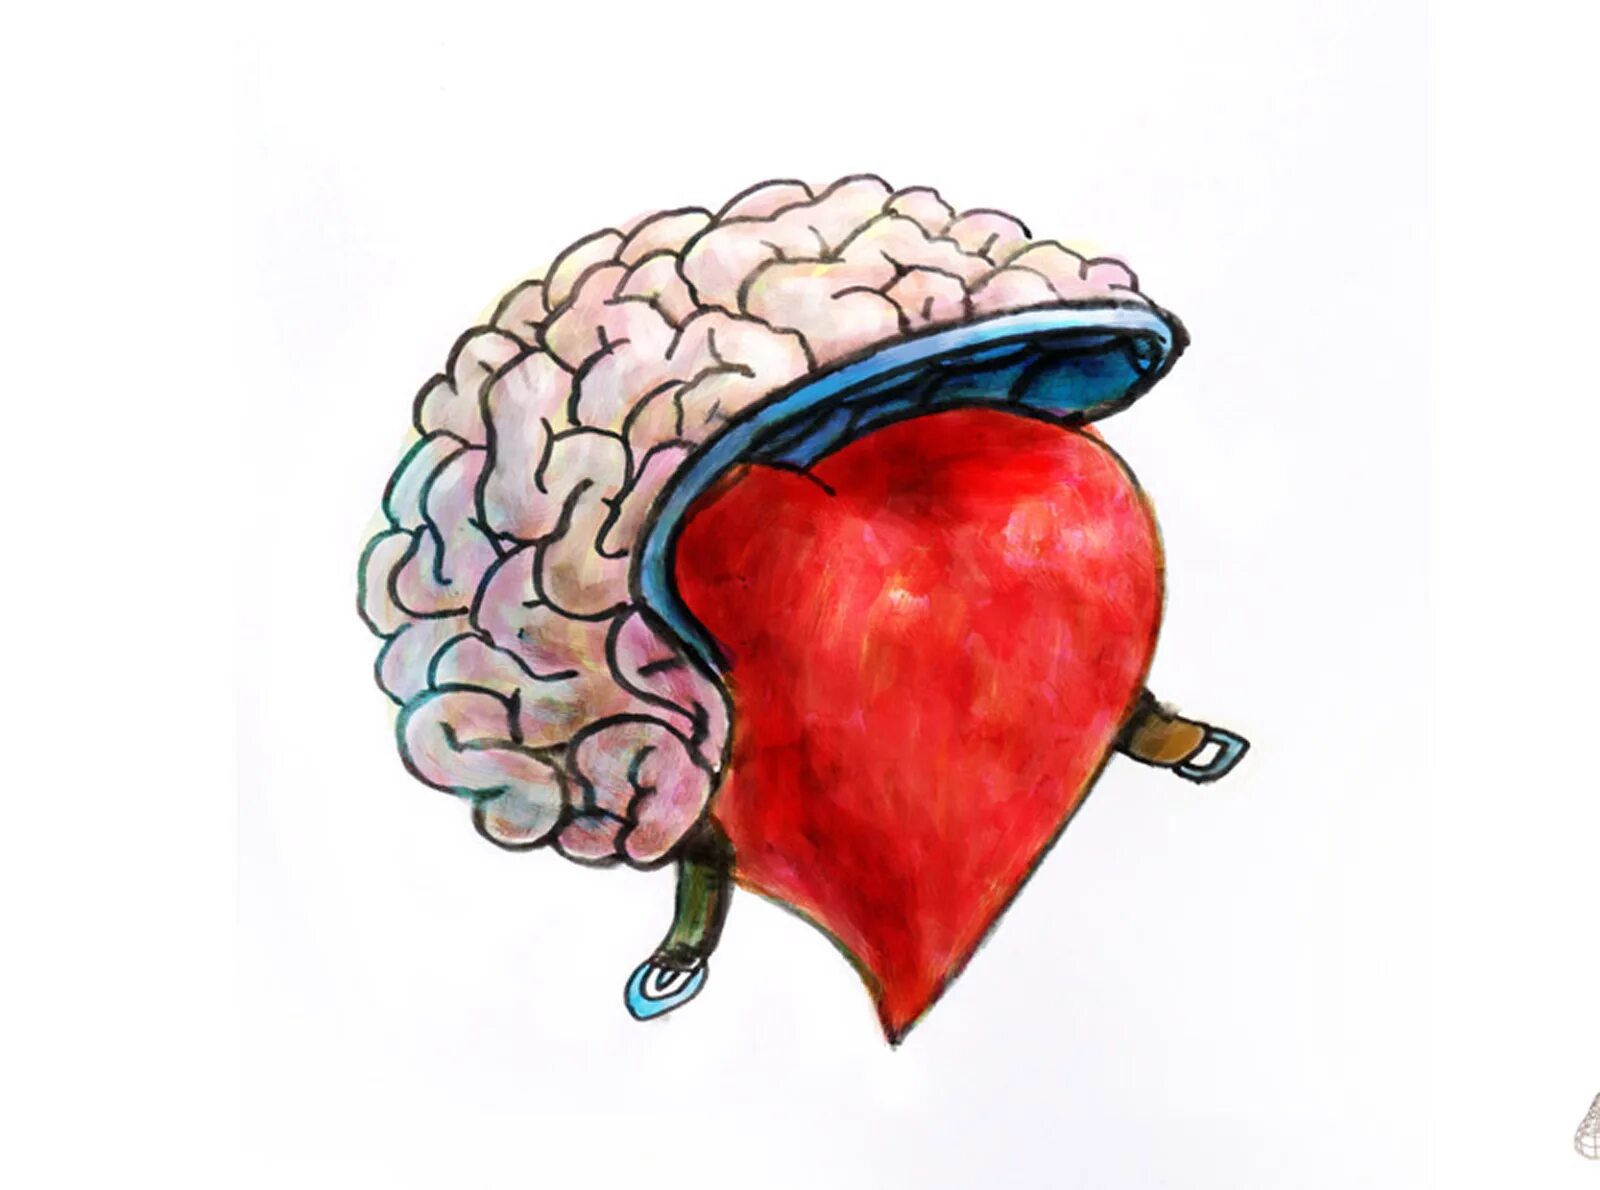 Heart and brain. Мозг и сердце. Ум и сердце. Сердце и разум. Мозг в виде сердца.